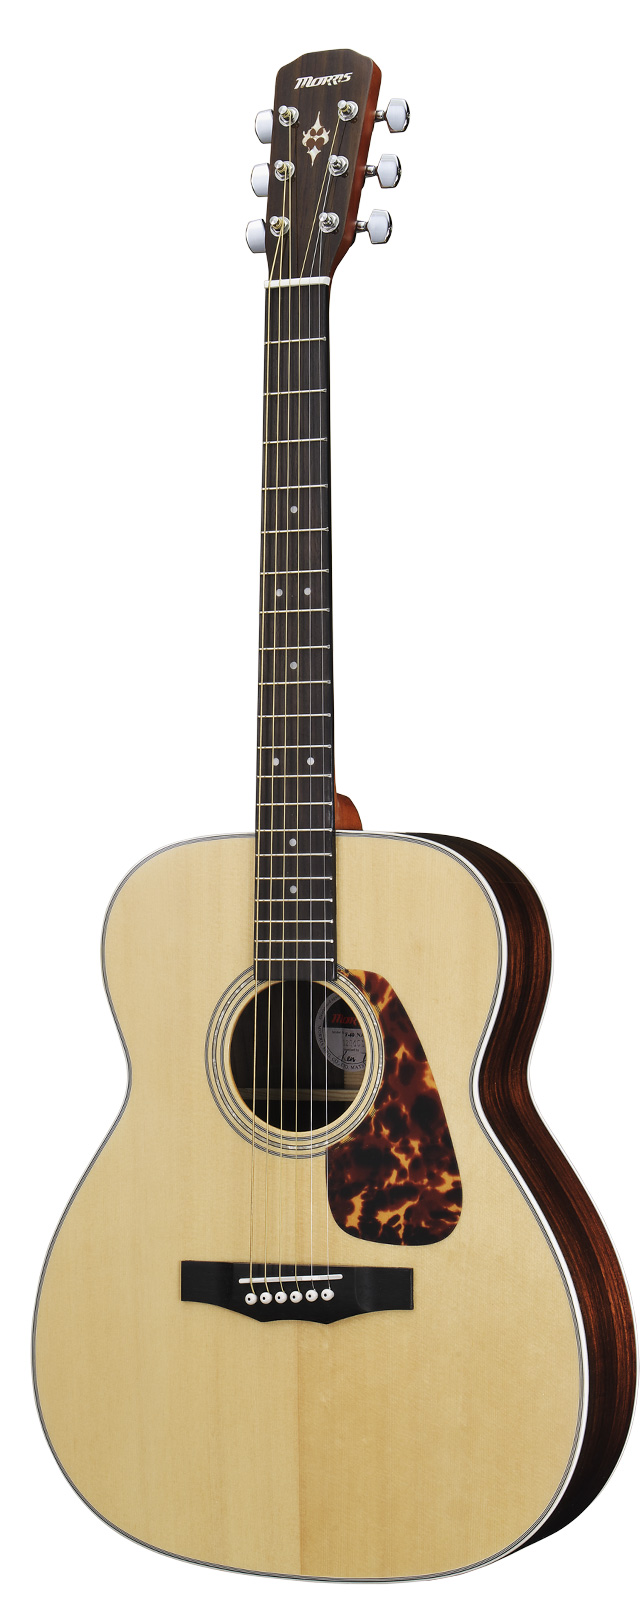 morrisアコースティックギターS-40 - アコースティックギター